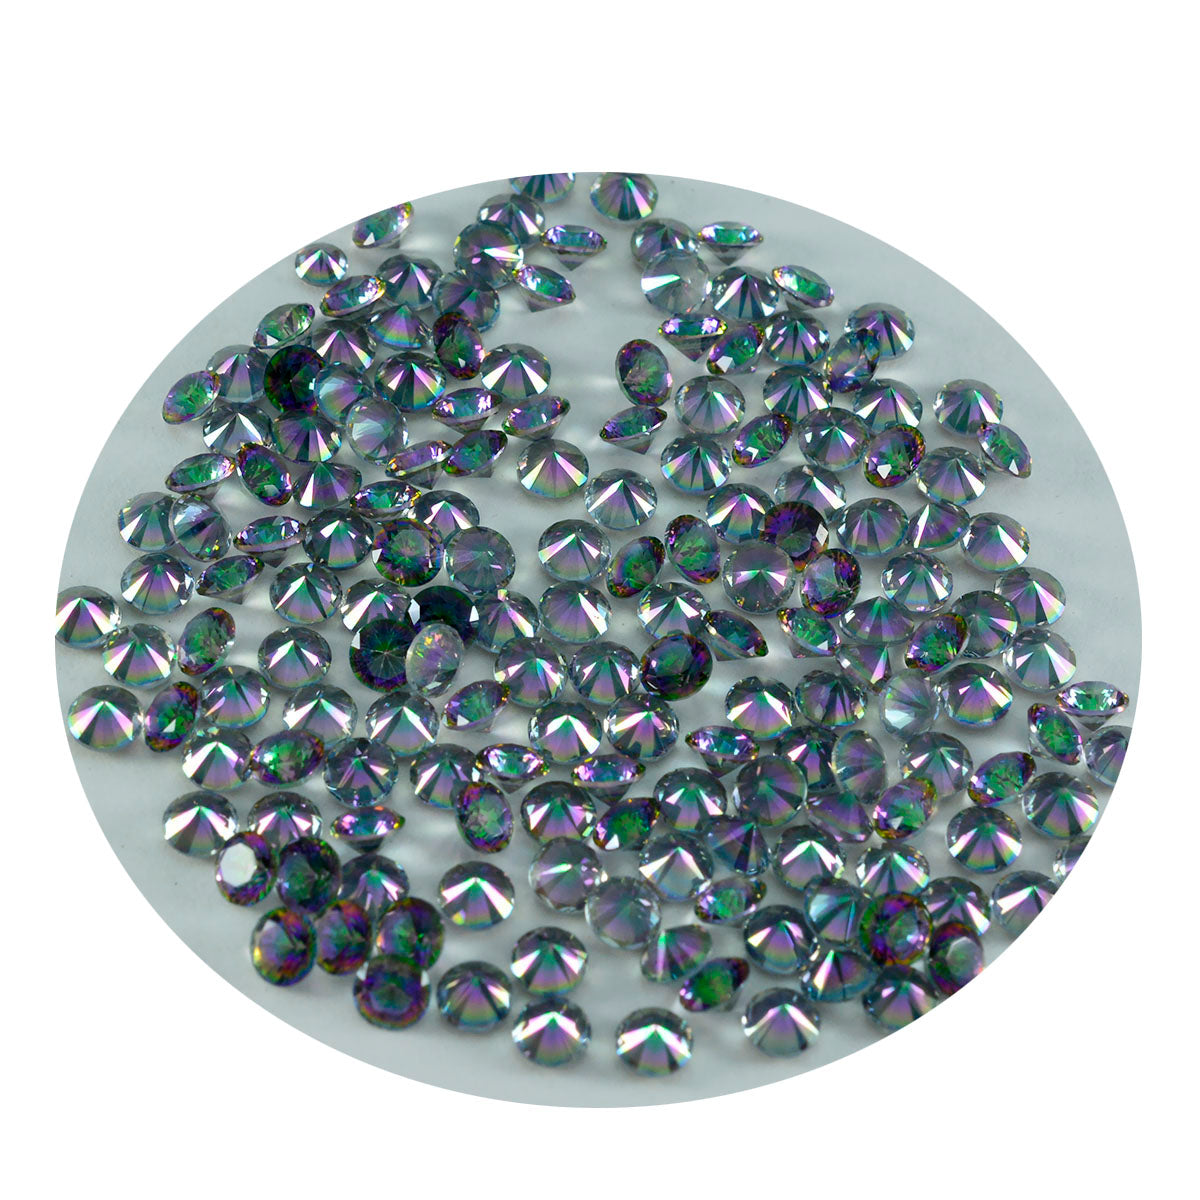 Riyogems 1PC Multi Color Mystic Quartz Faceted 3x3 mm Round Shape wonderful Quality Loose Stone